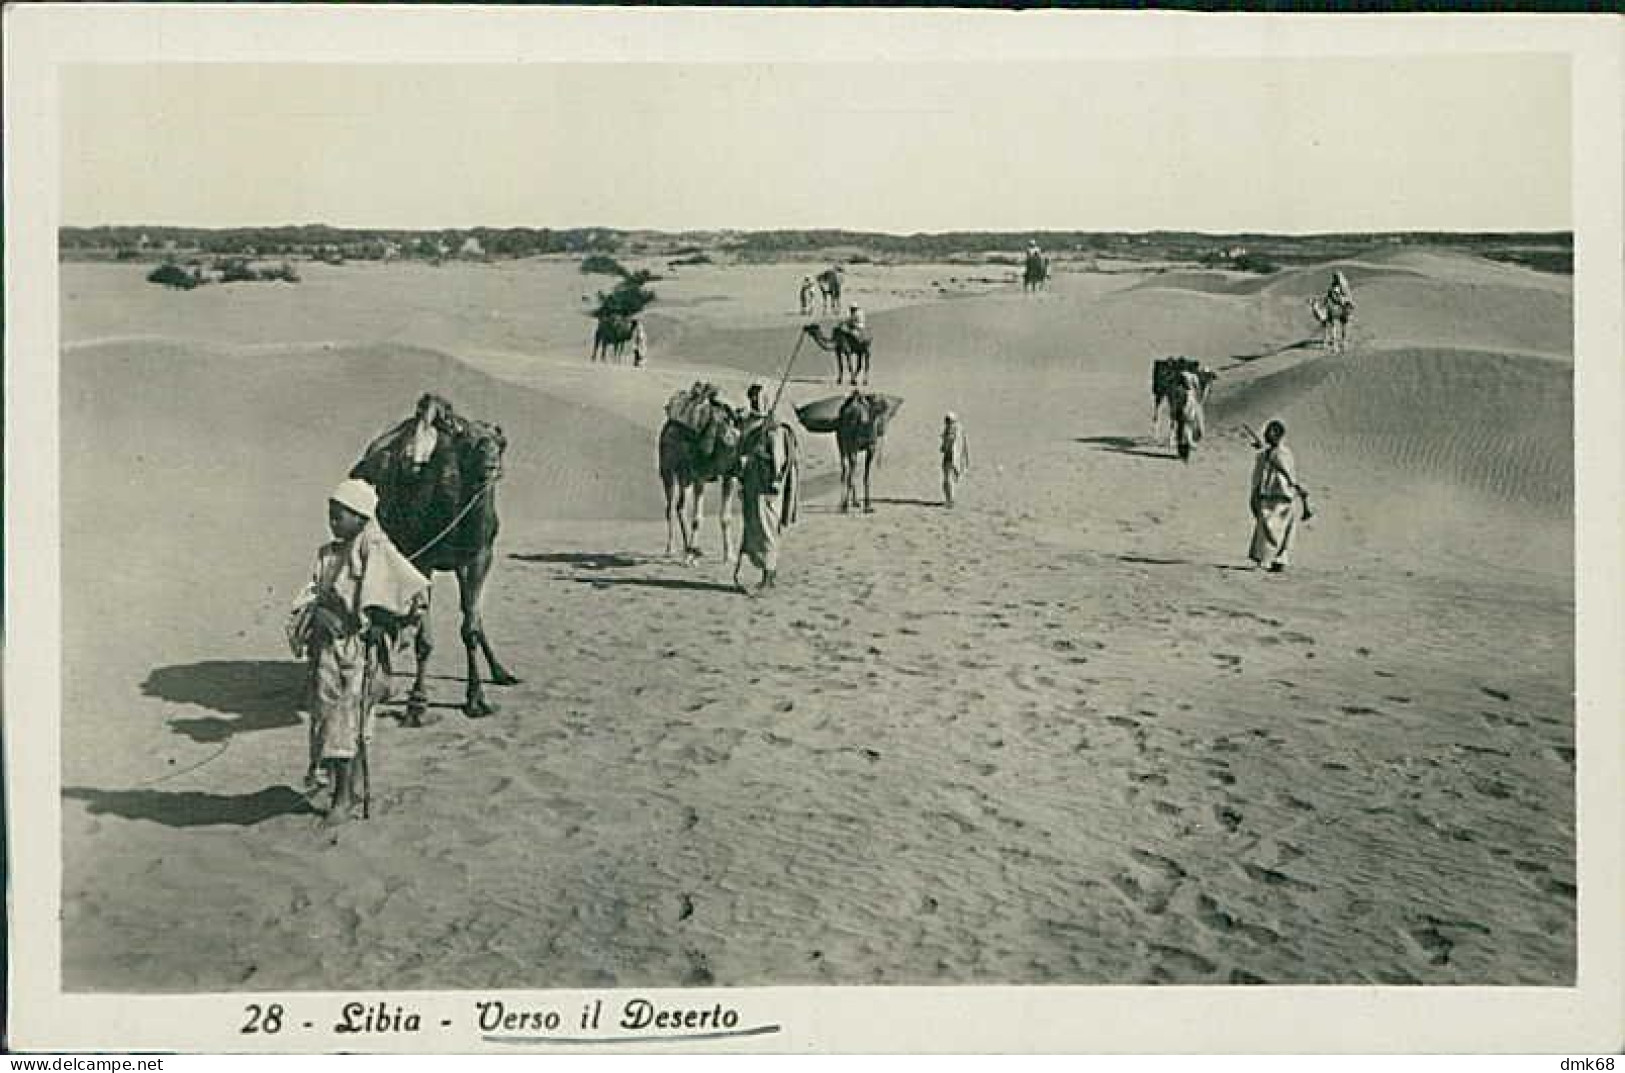 AFRICA - LIBYA / LIBIA - VERSO IL DESERTO / TOWARDS THE DESERT - EDIT AULA - RPPC POSTCARD 1930s (12588) - Libya